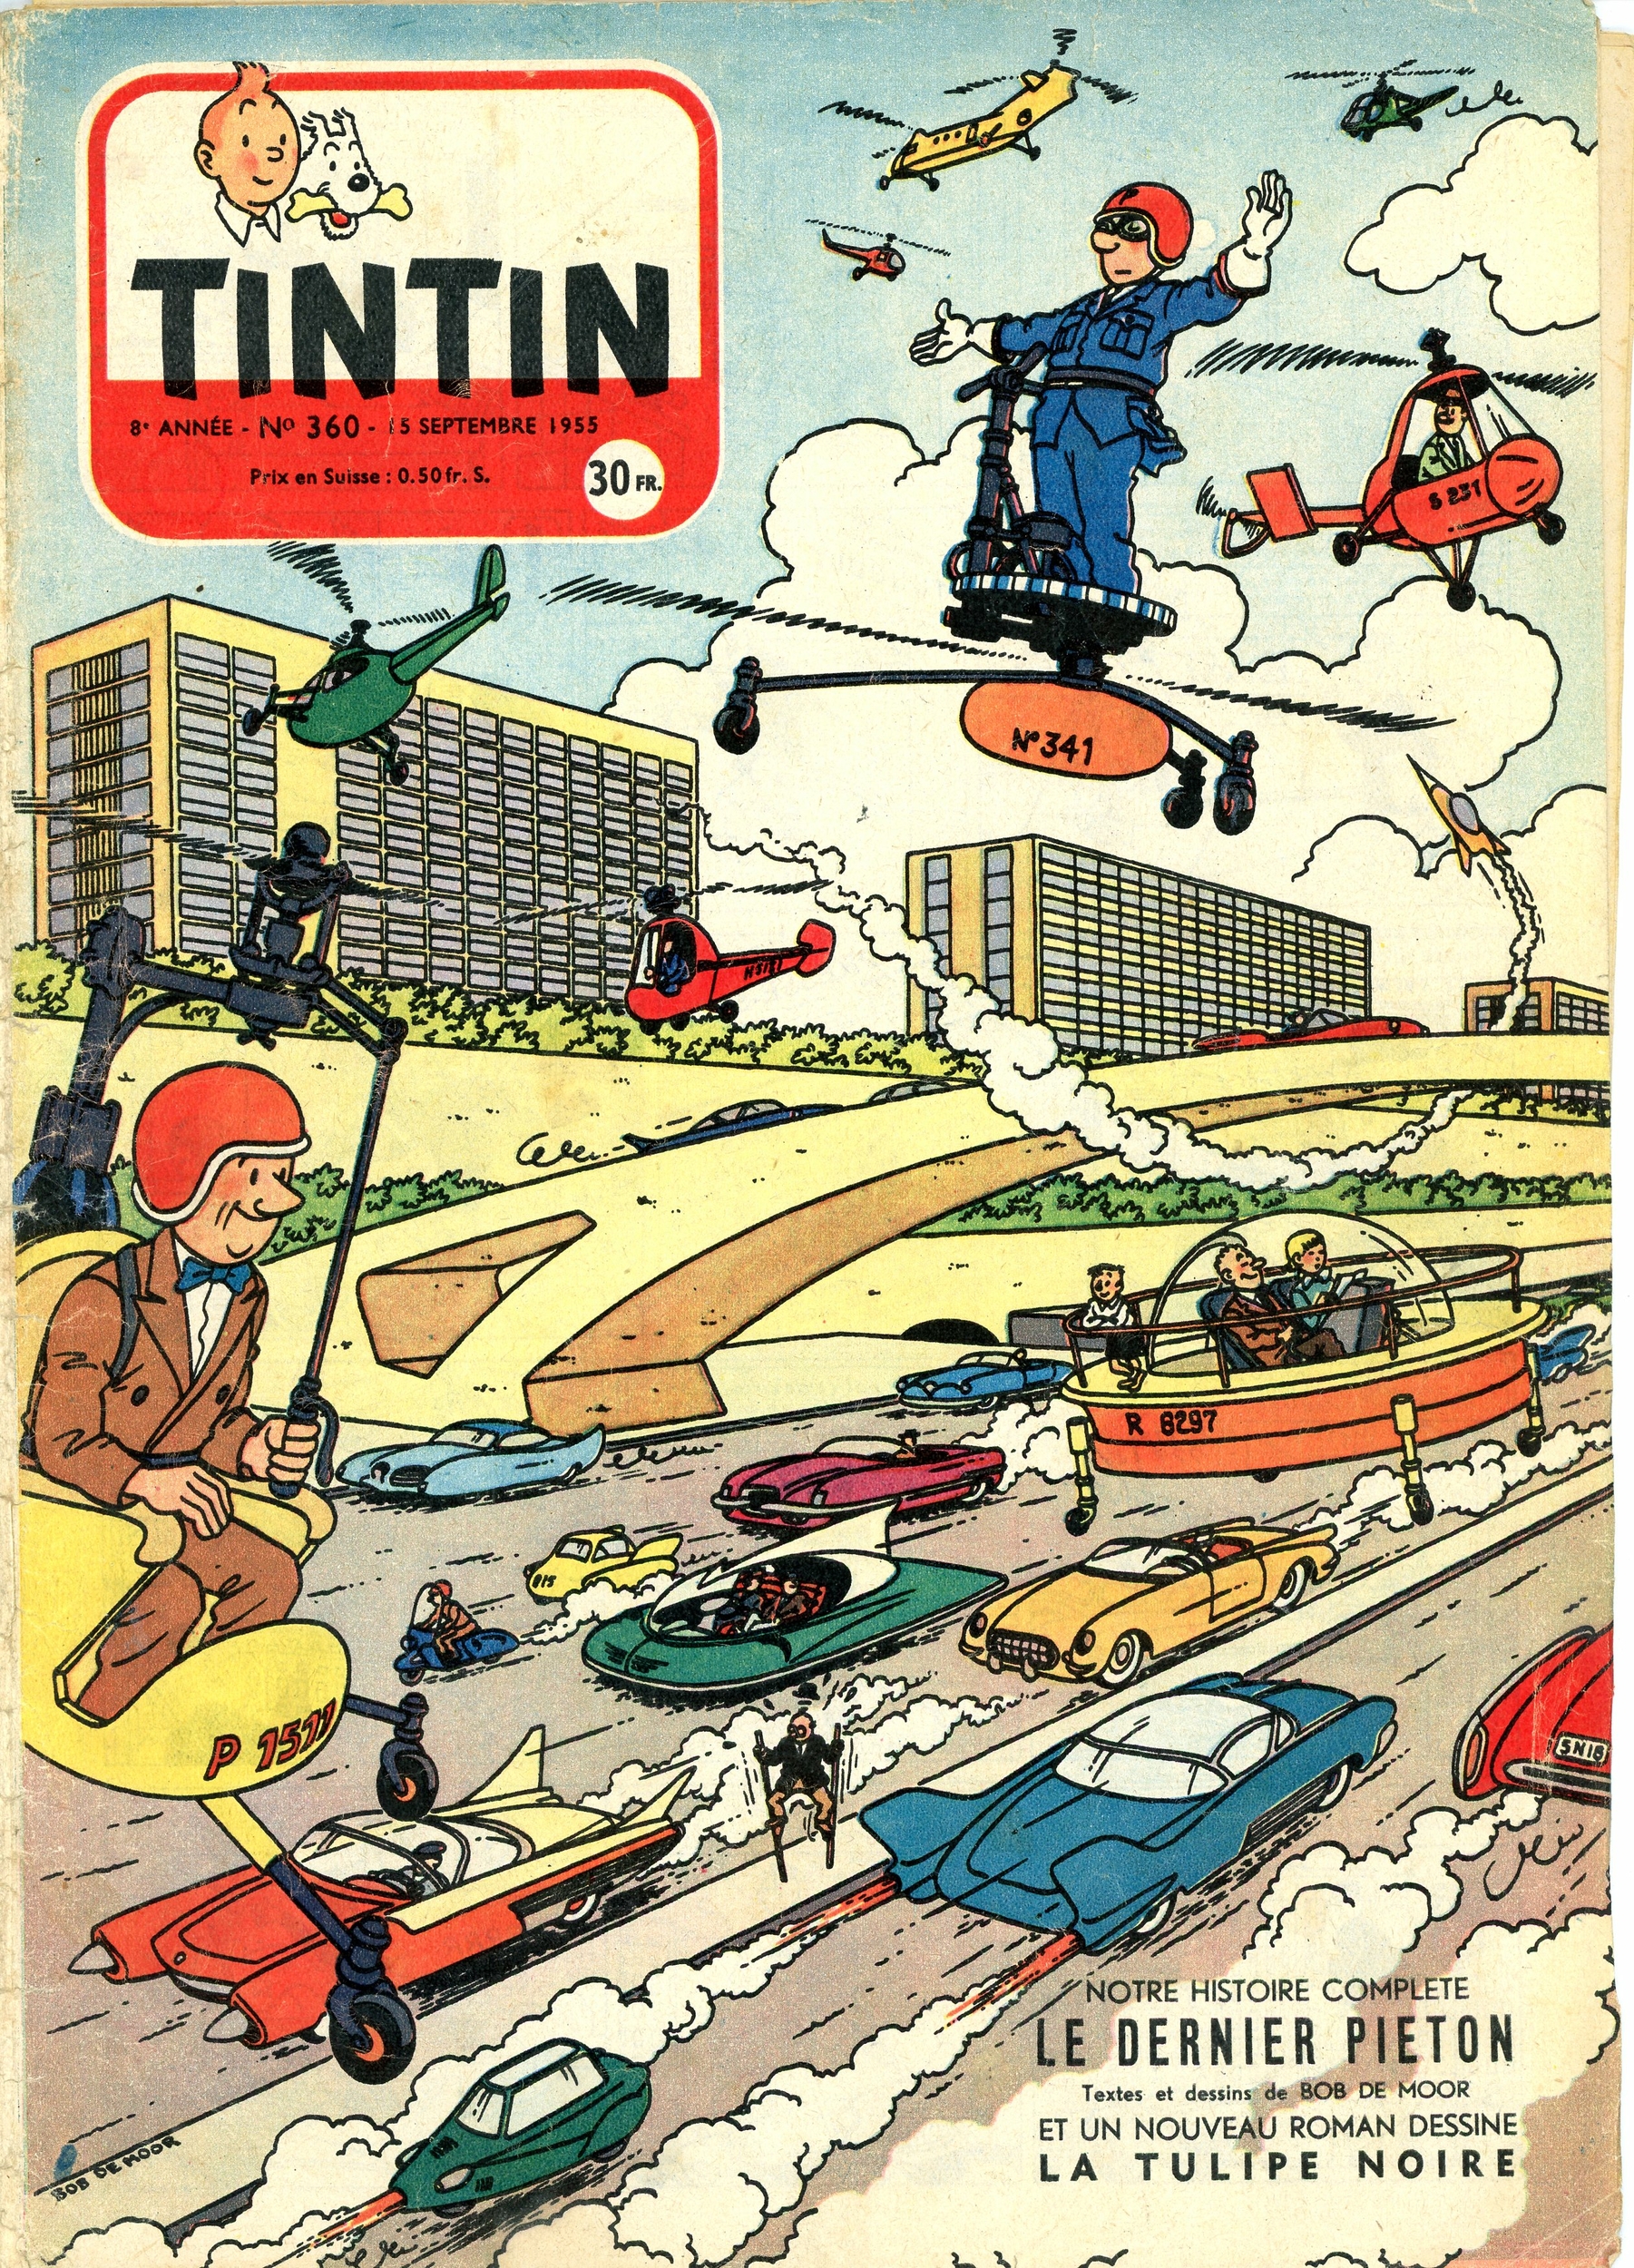 JOURNAL DE TINTIN n° 360 - TINTIN ACTUALITÉS 1955 - AFFAIRE TOURNESOL